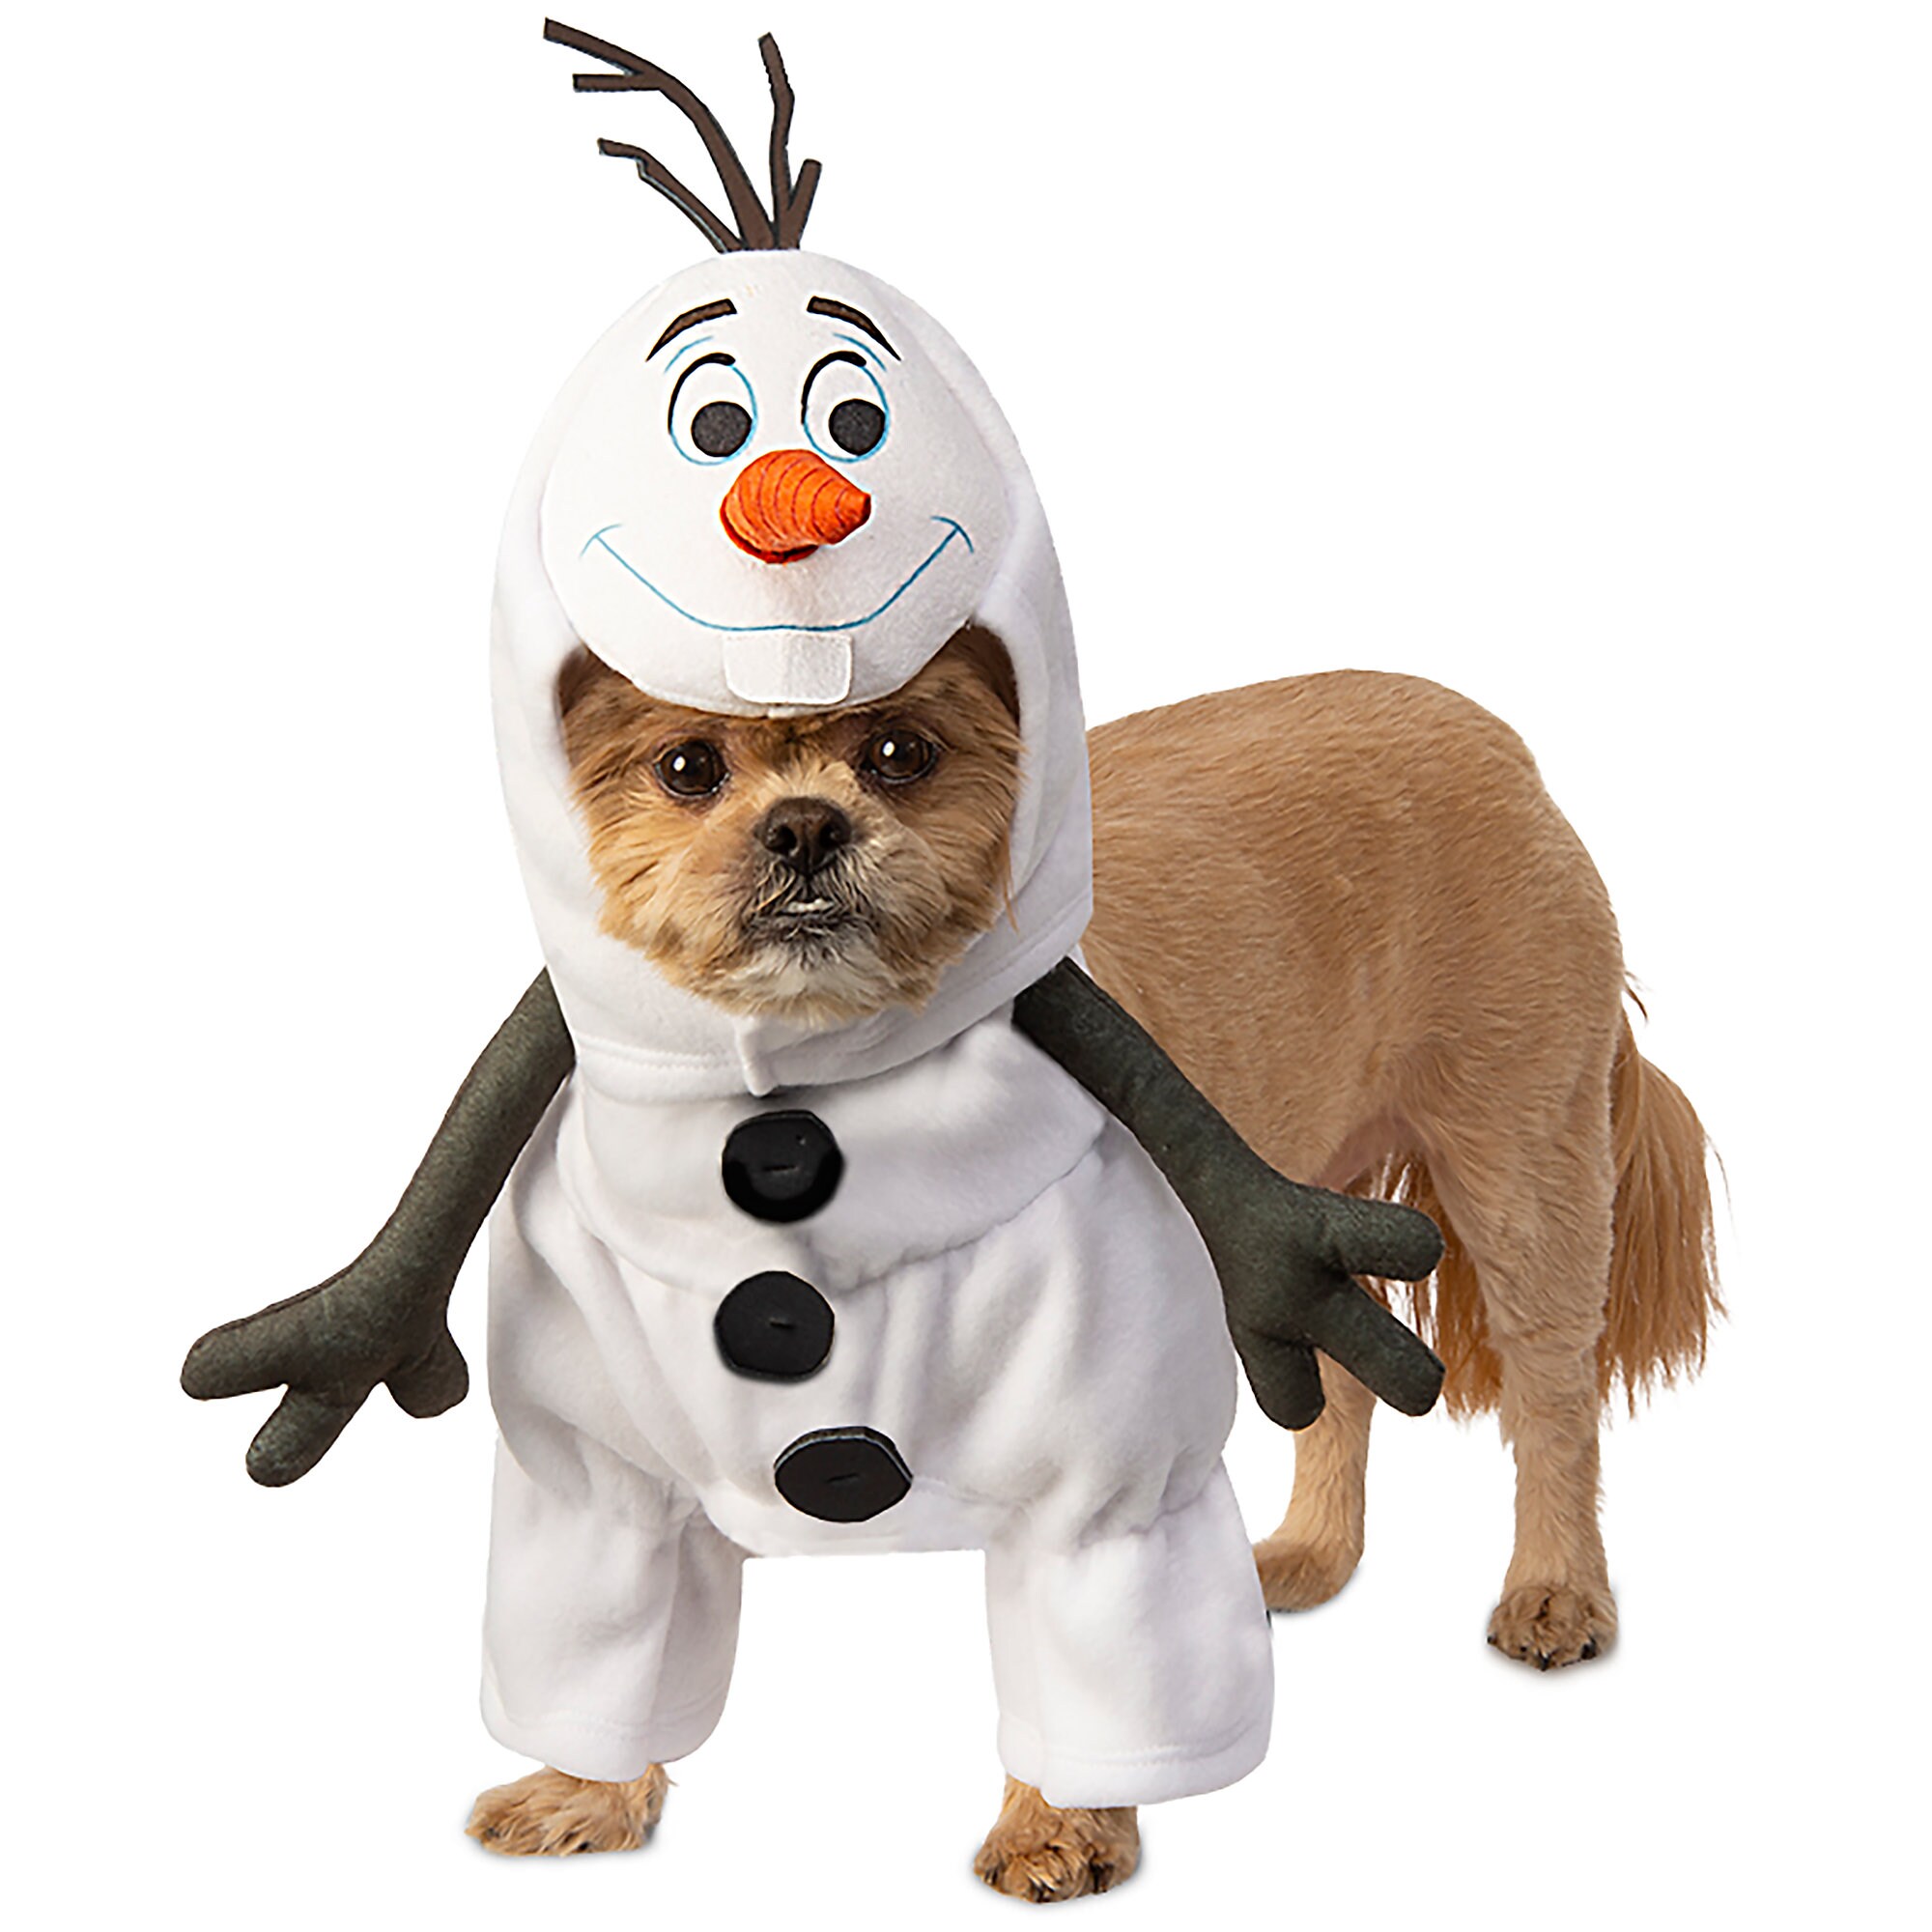 Olaf Pet Costume by Rubie's - Frozen